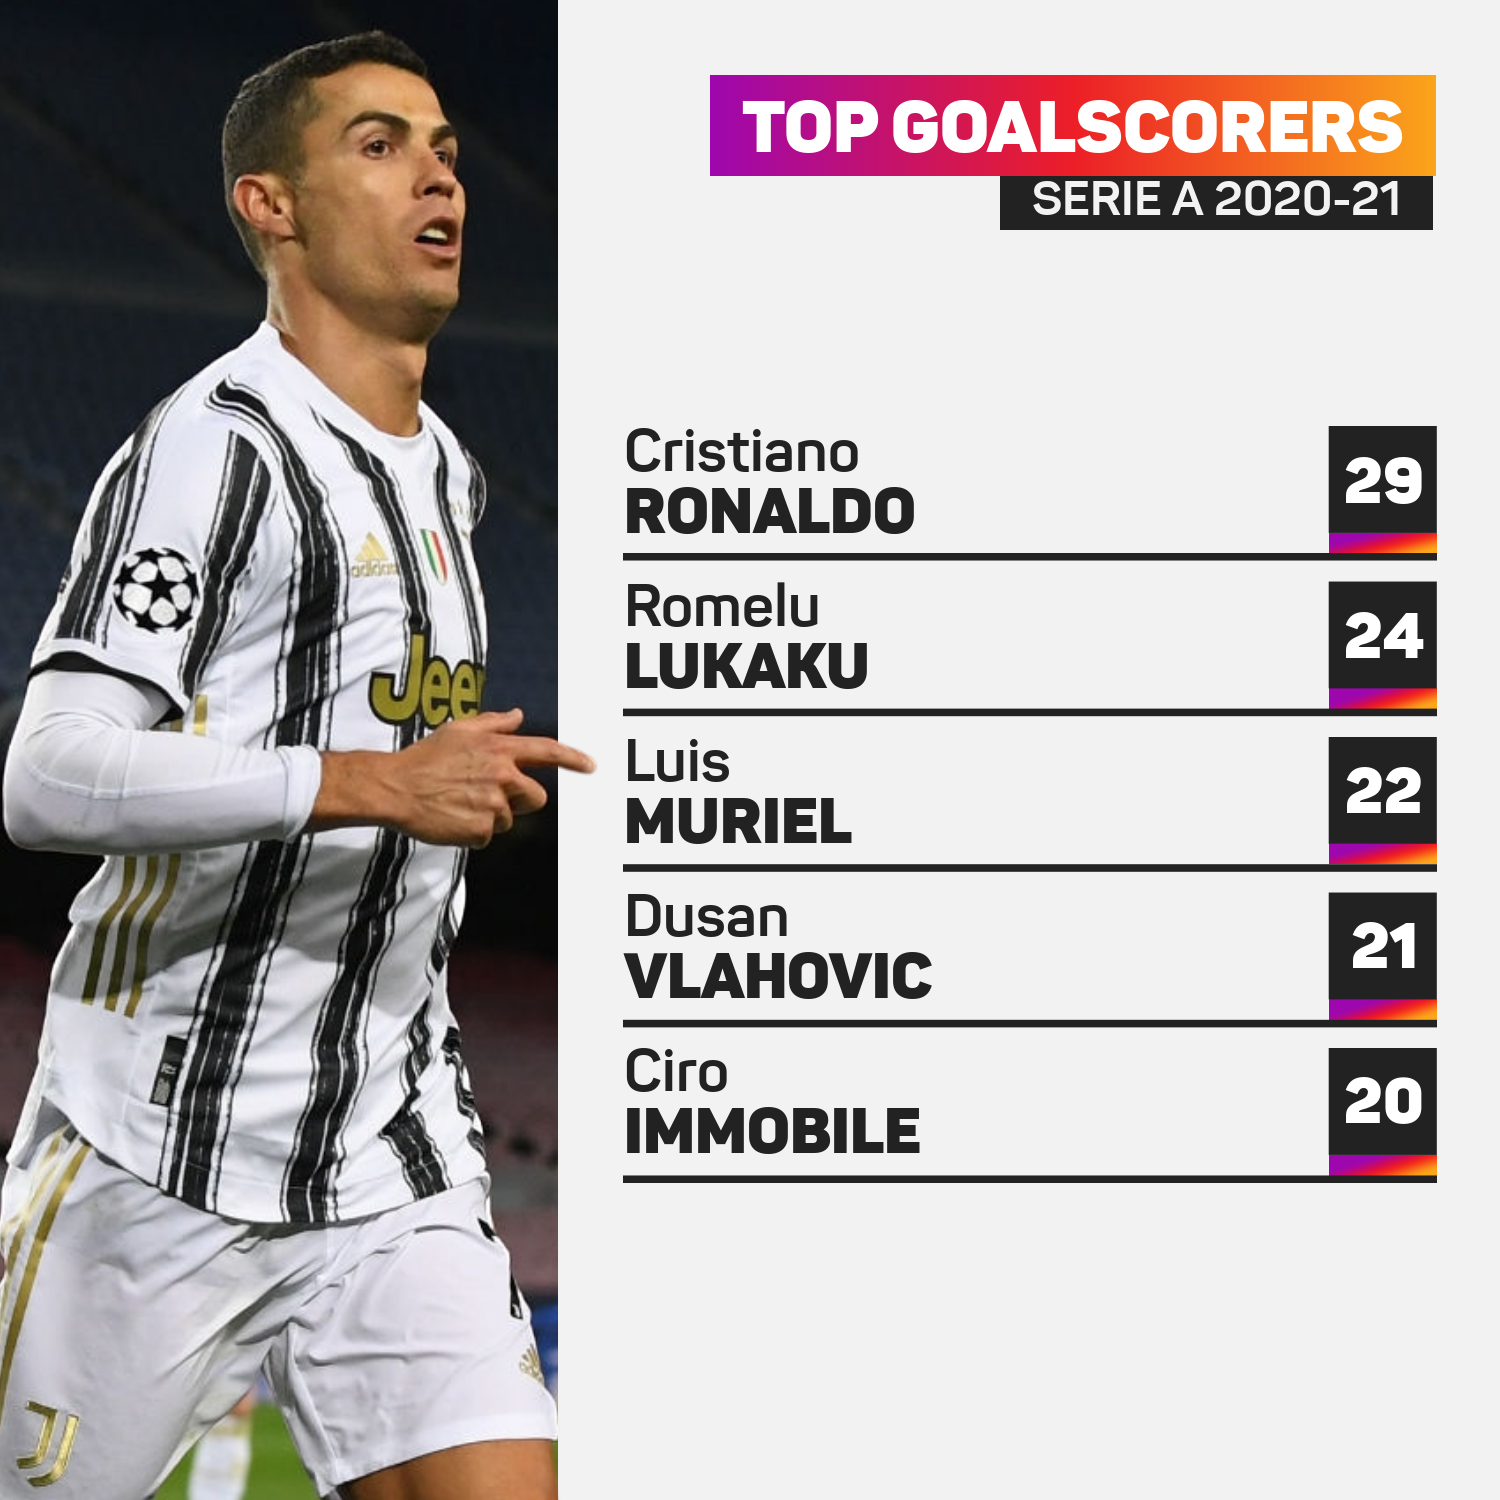 Juventus superstar Cristiano Ronaldo